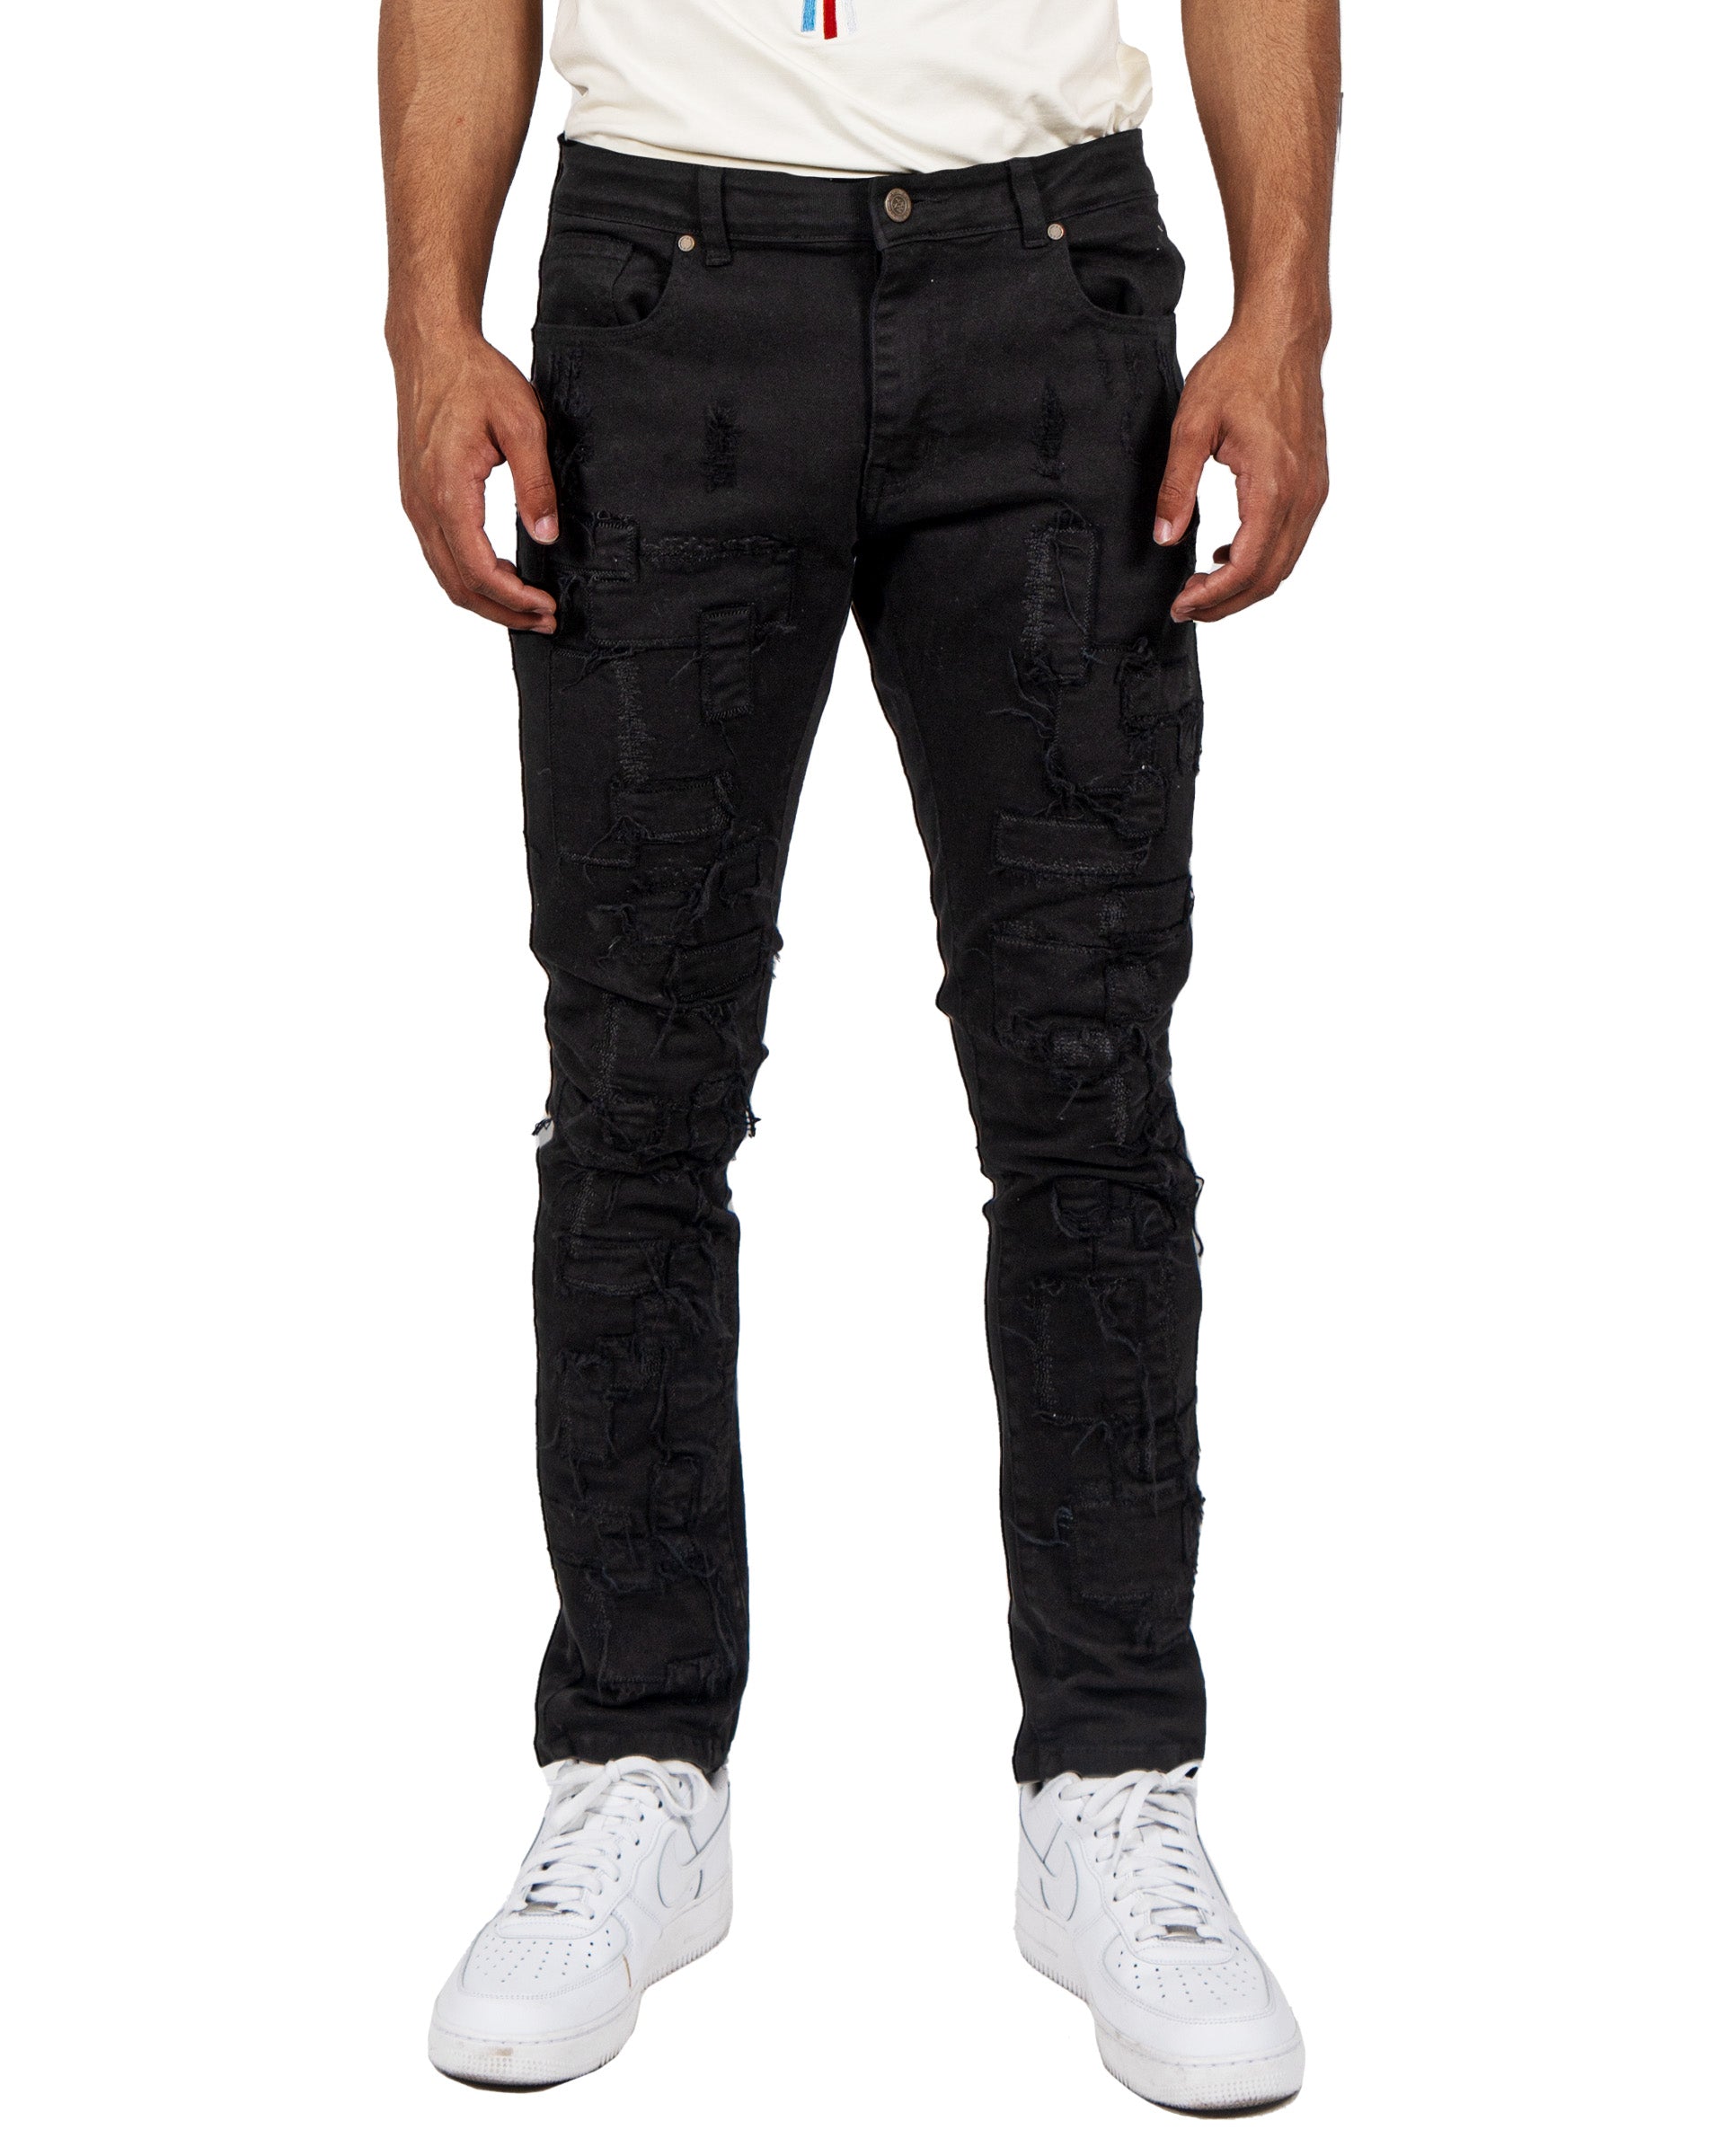 HUMBOLDT | Slim Fit Stitched Denim Jeans in Jet Black